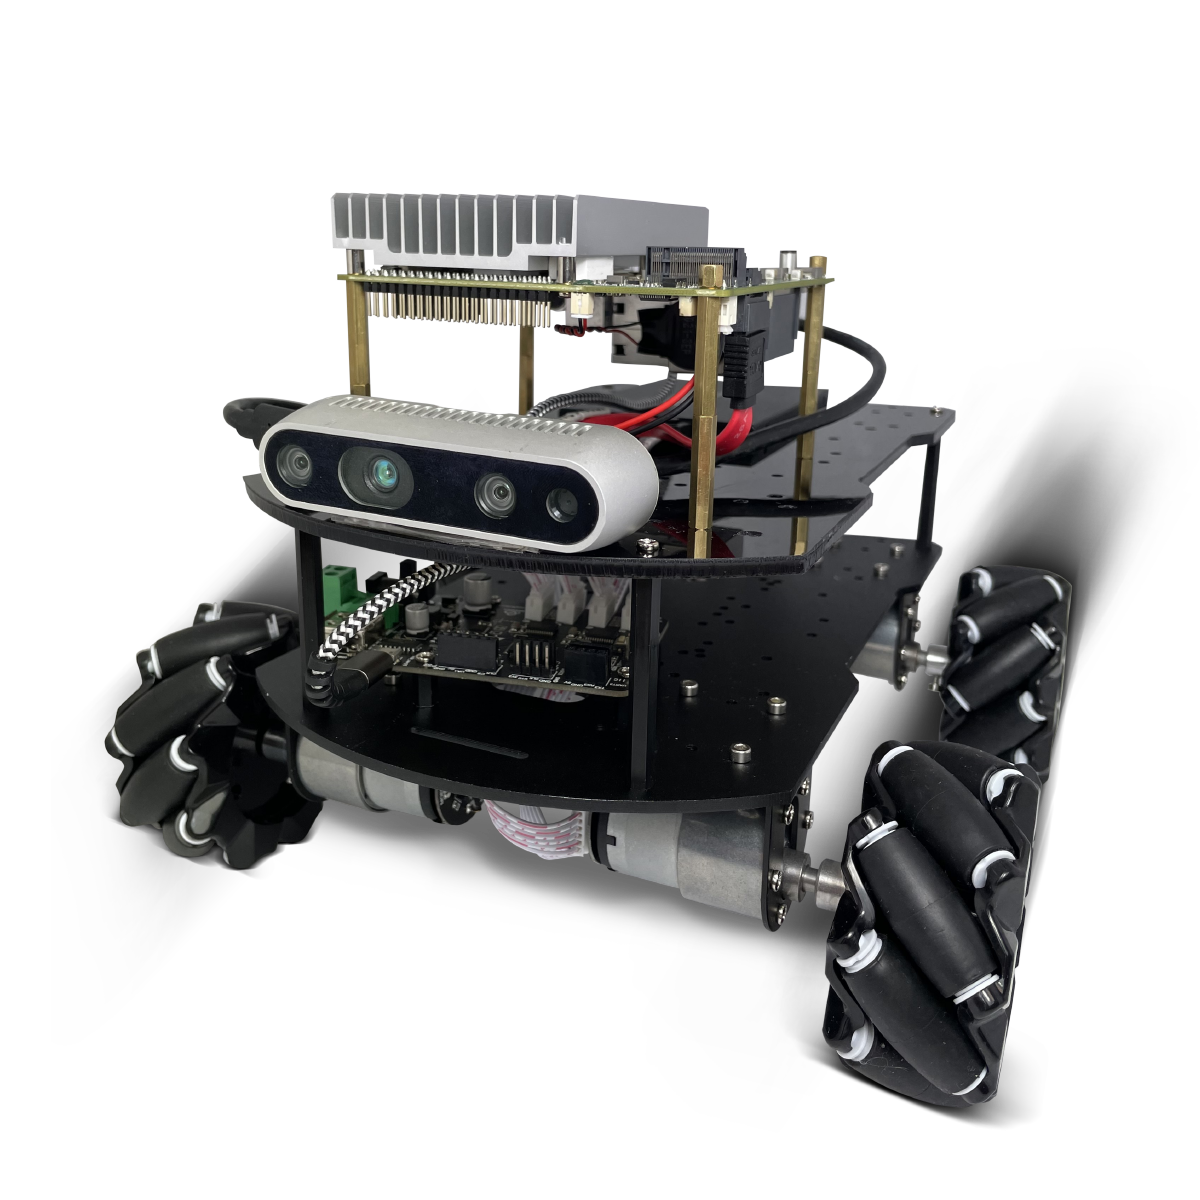 UP Xtreme i11 & UP Squared 6000 Robotic Development Kits